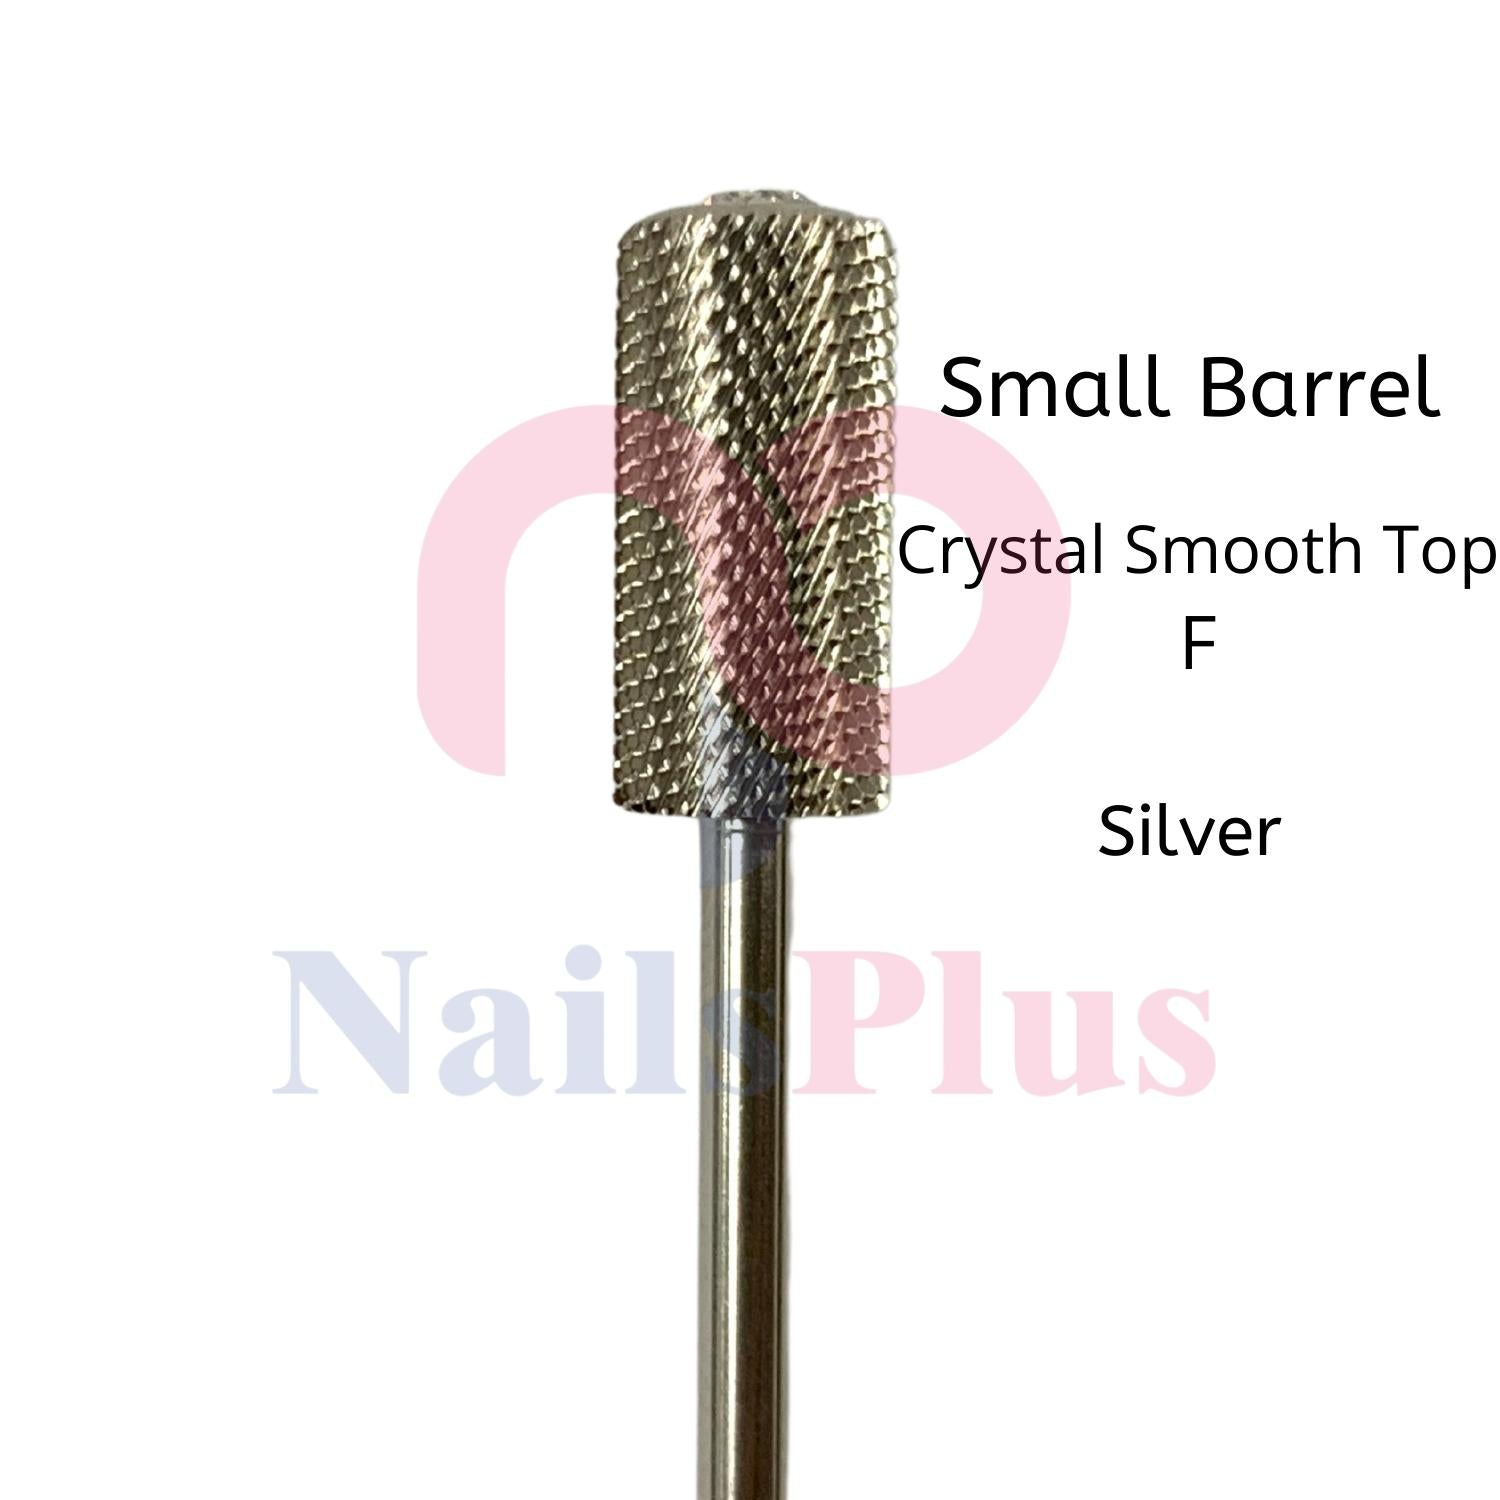 Small Barrel - Crystal Smooth Top - F